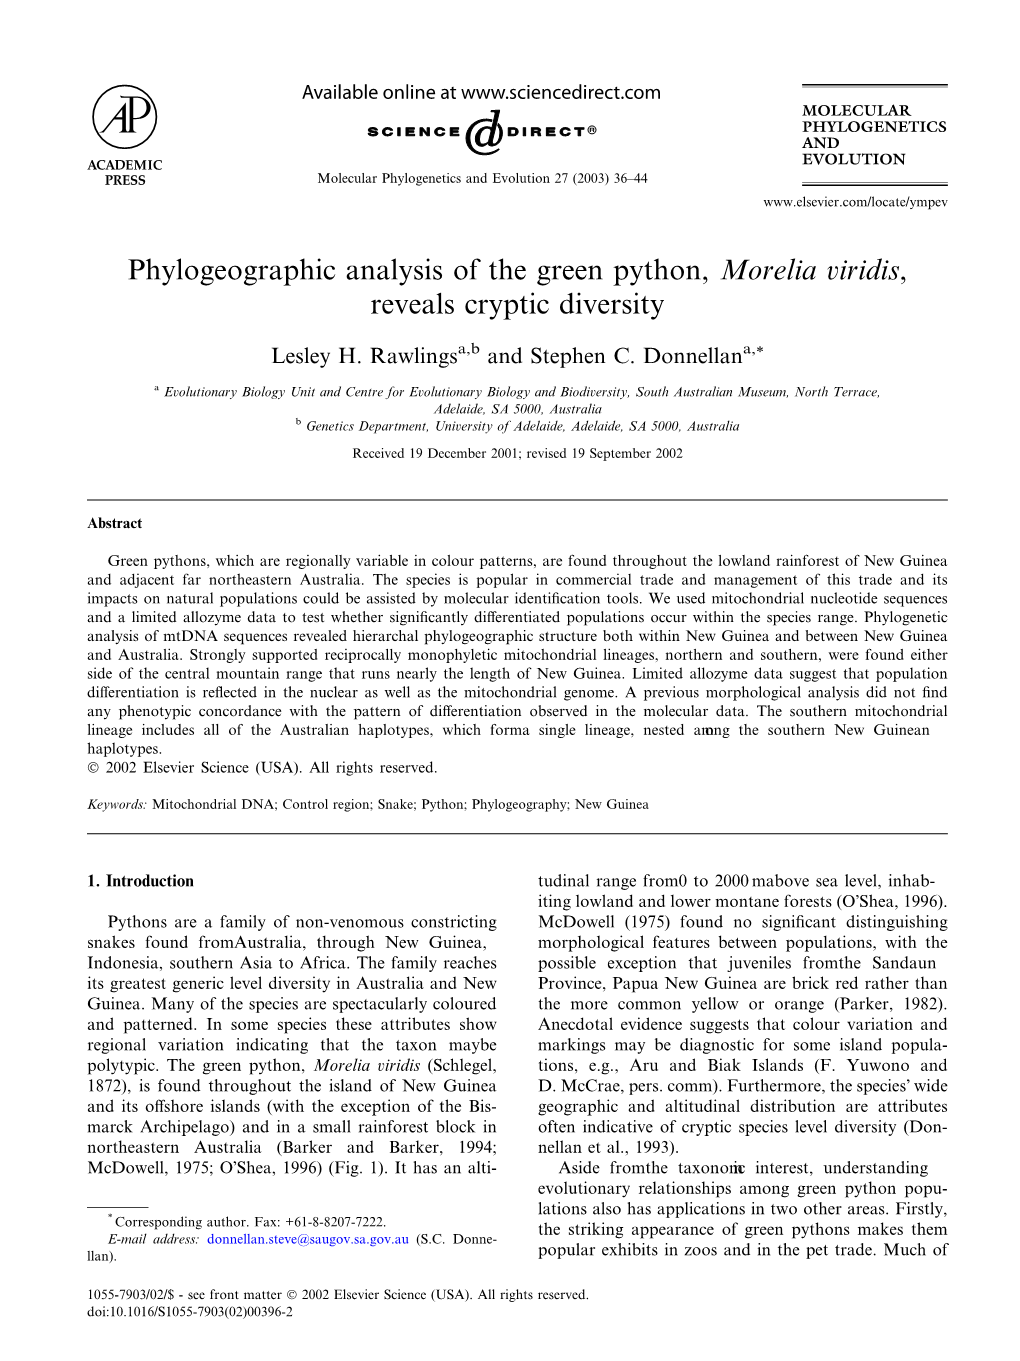 Phylogeographic Analysis of the Green Python, Morelia Viridis, Reveals Cryptic Diversity